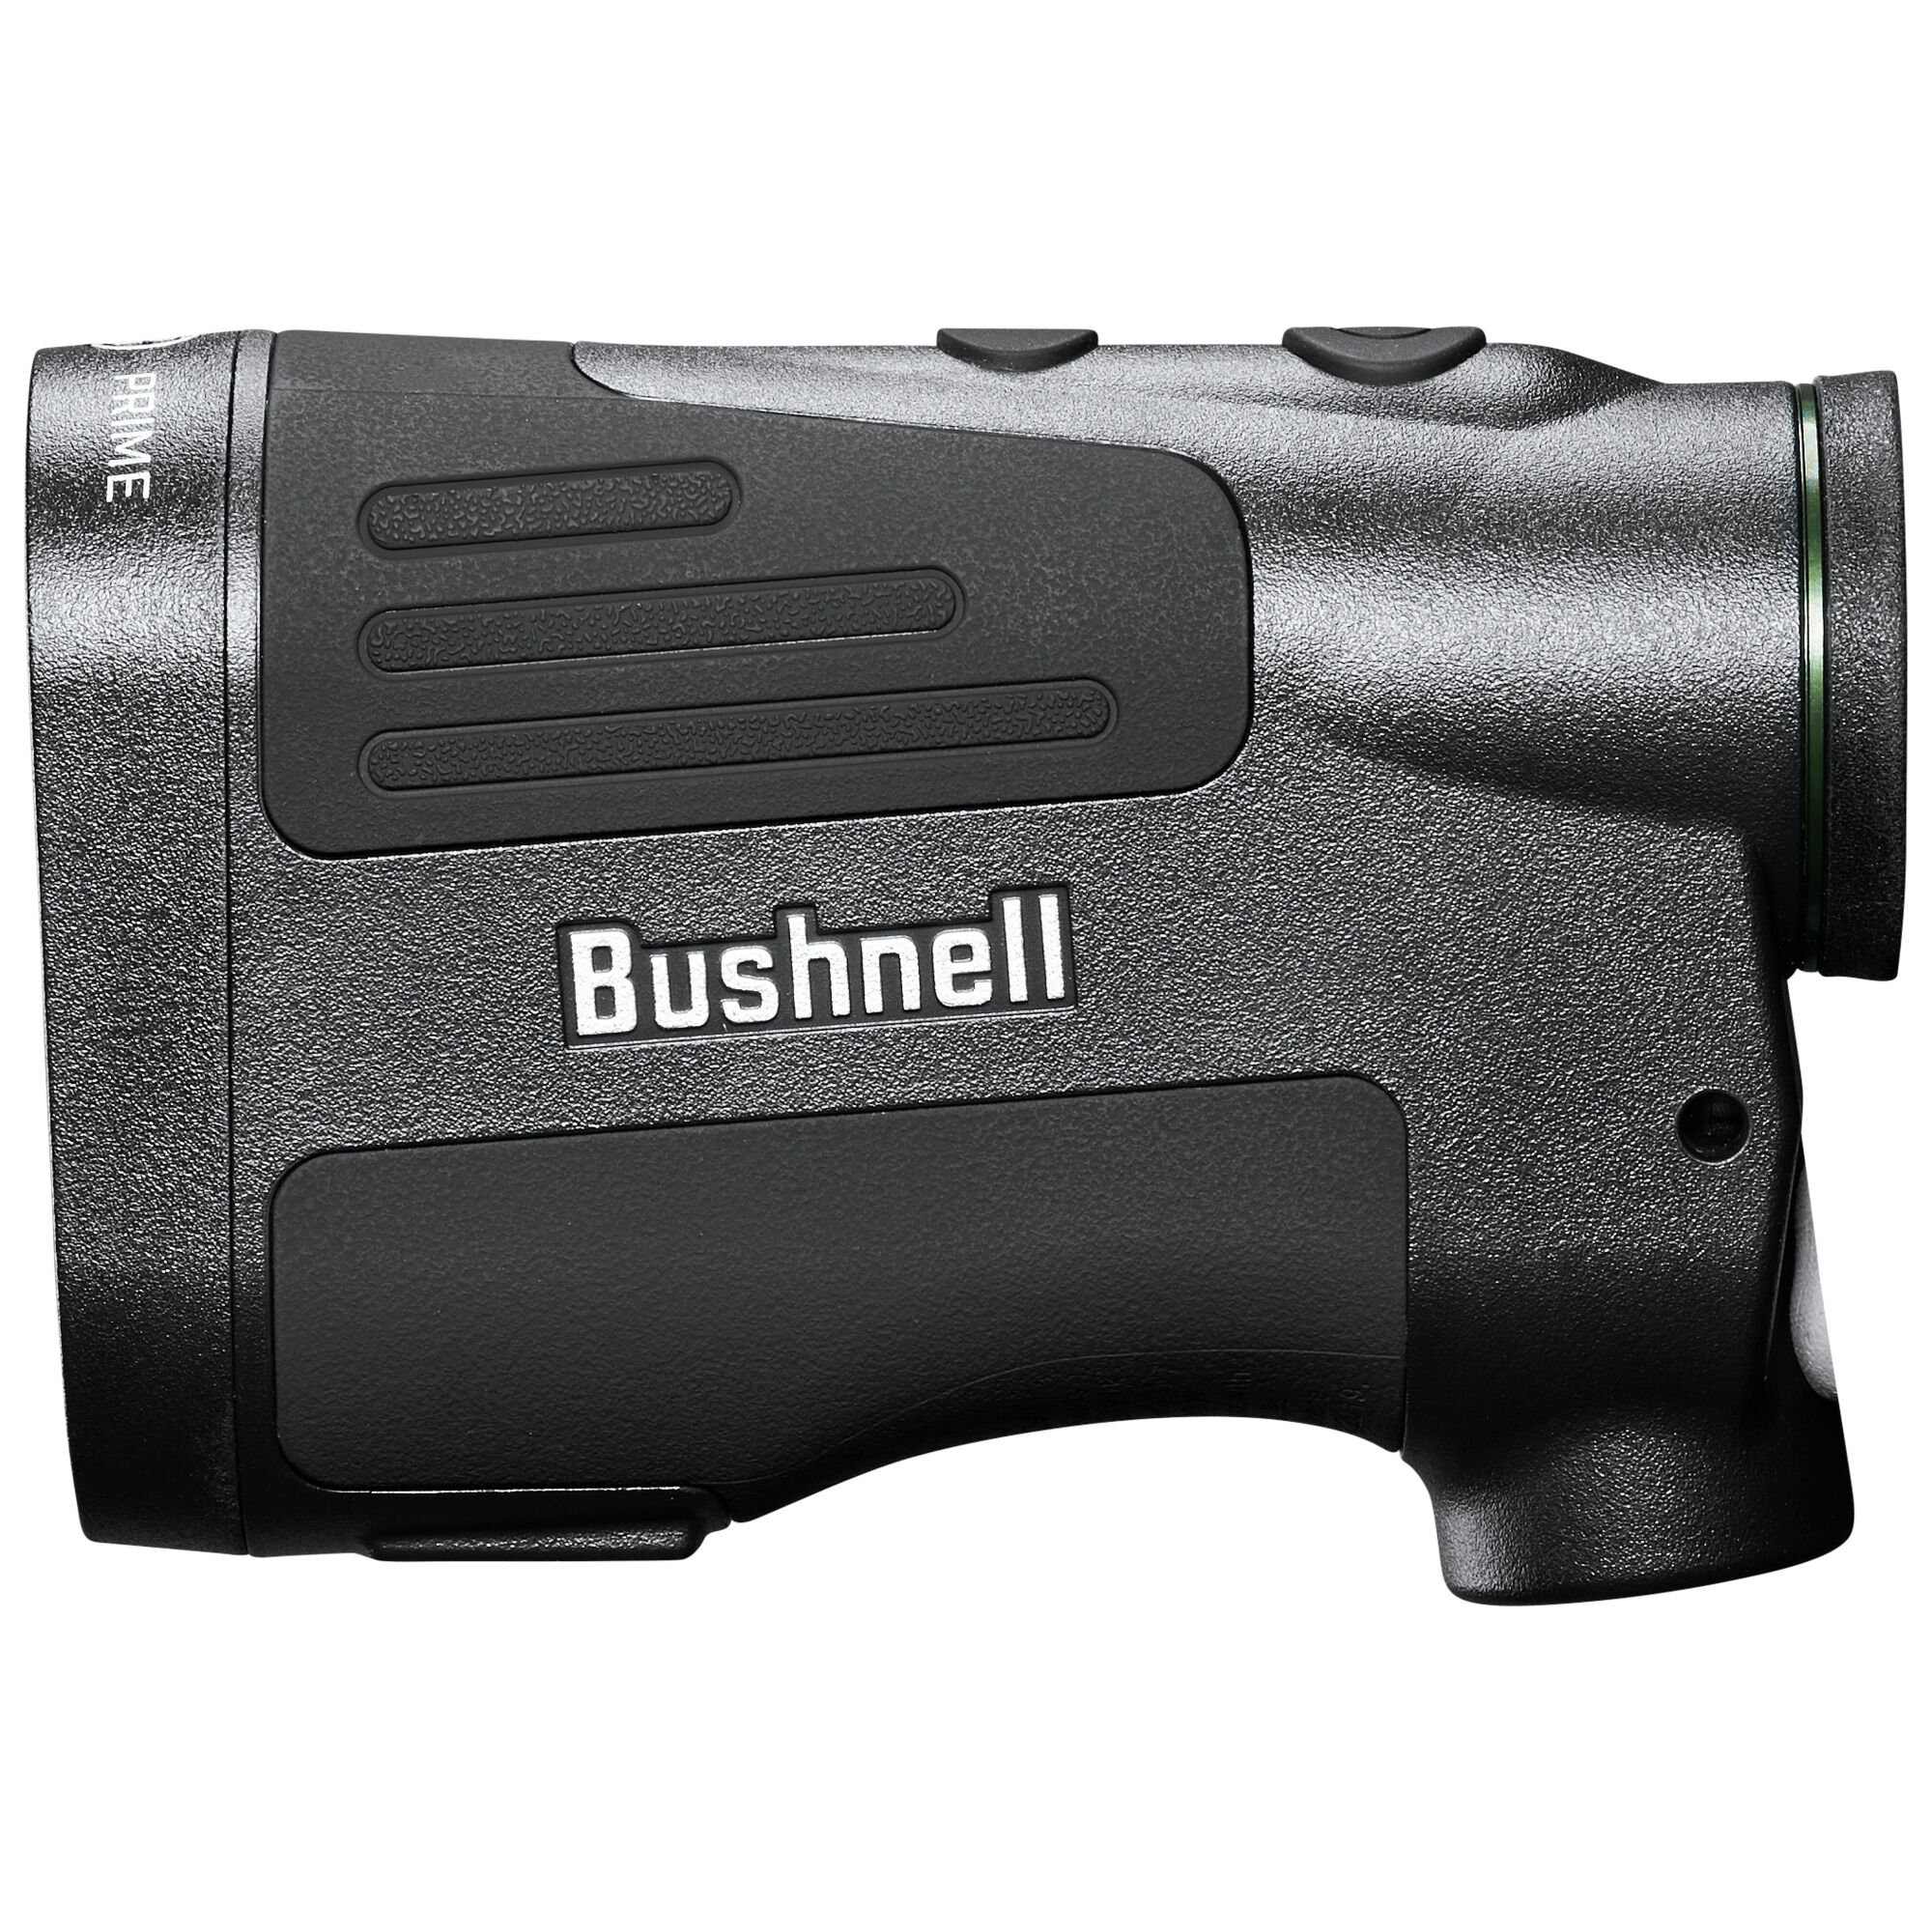 NEW Military Issued Bushnell 205110 Elite 1600 ARC 7 x 26 mm Laser Rangefinder 